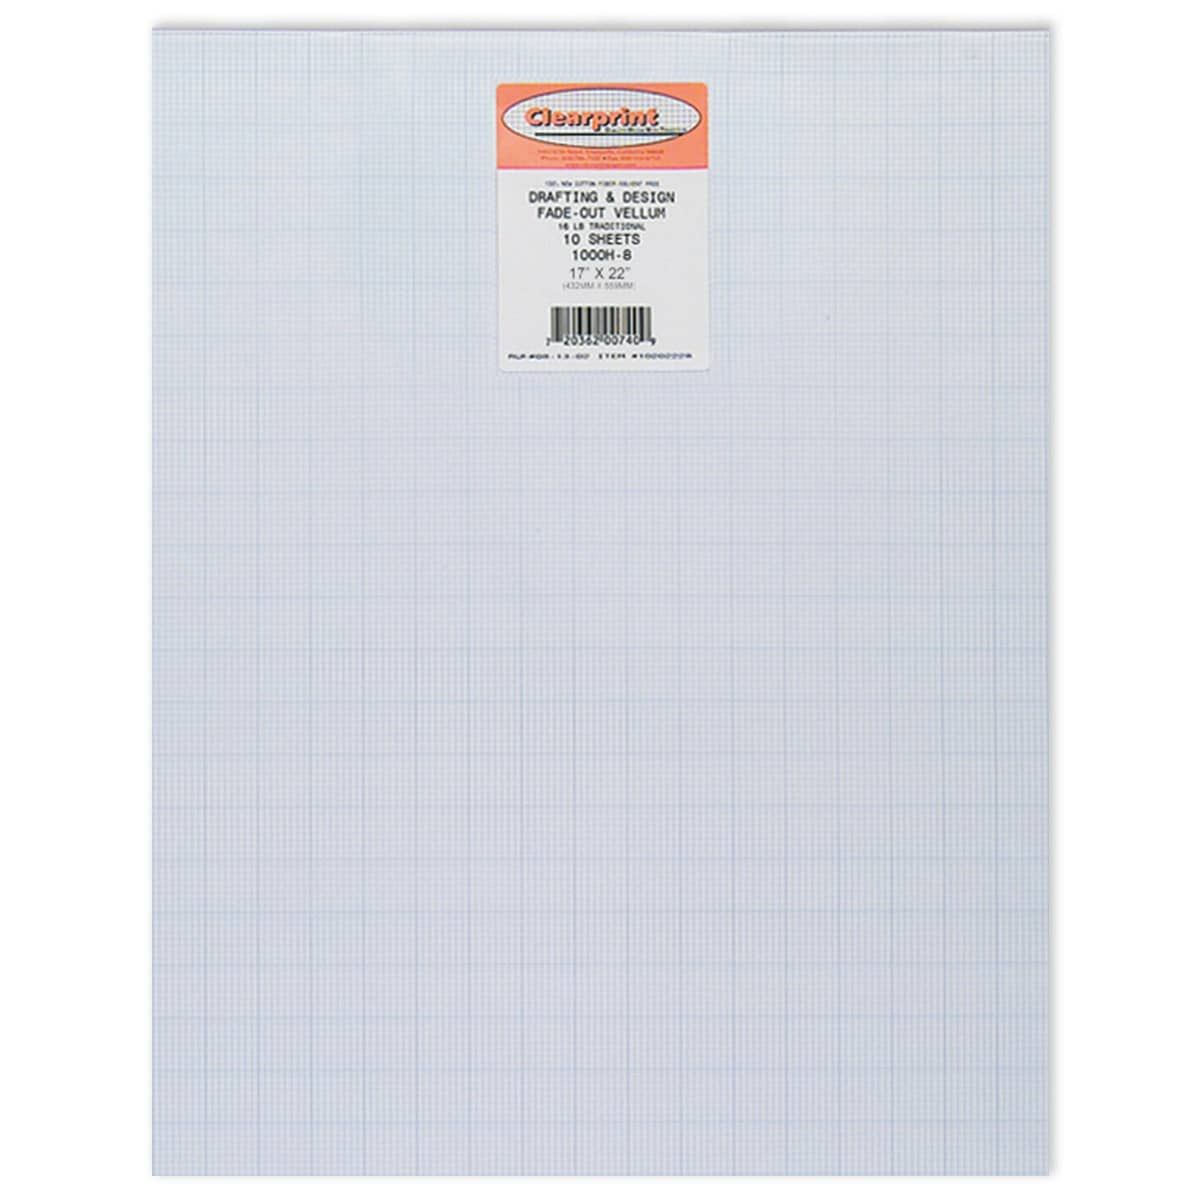 Clearprint 1000H Vellum 10 Sheet Pack 17 x 22" with 8x8 Grid